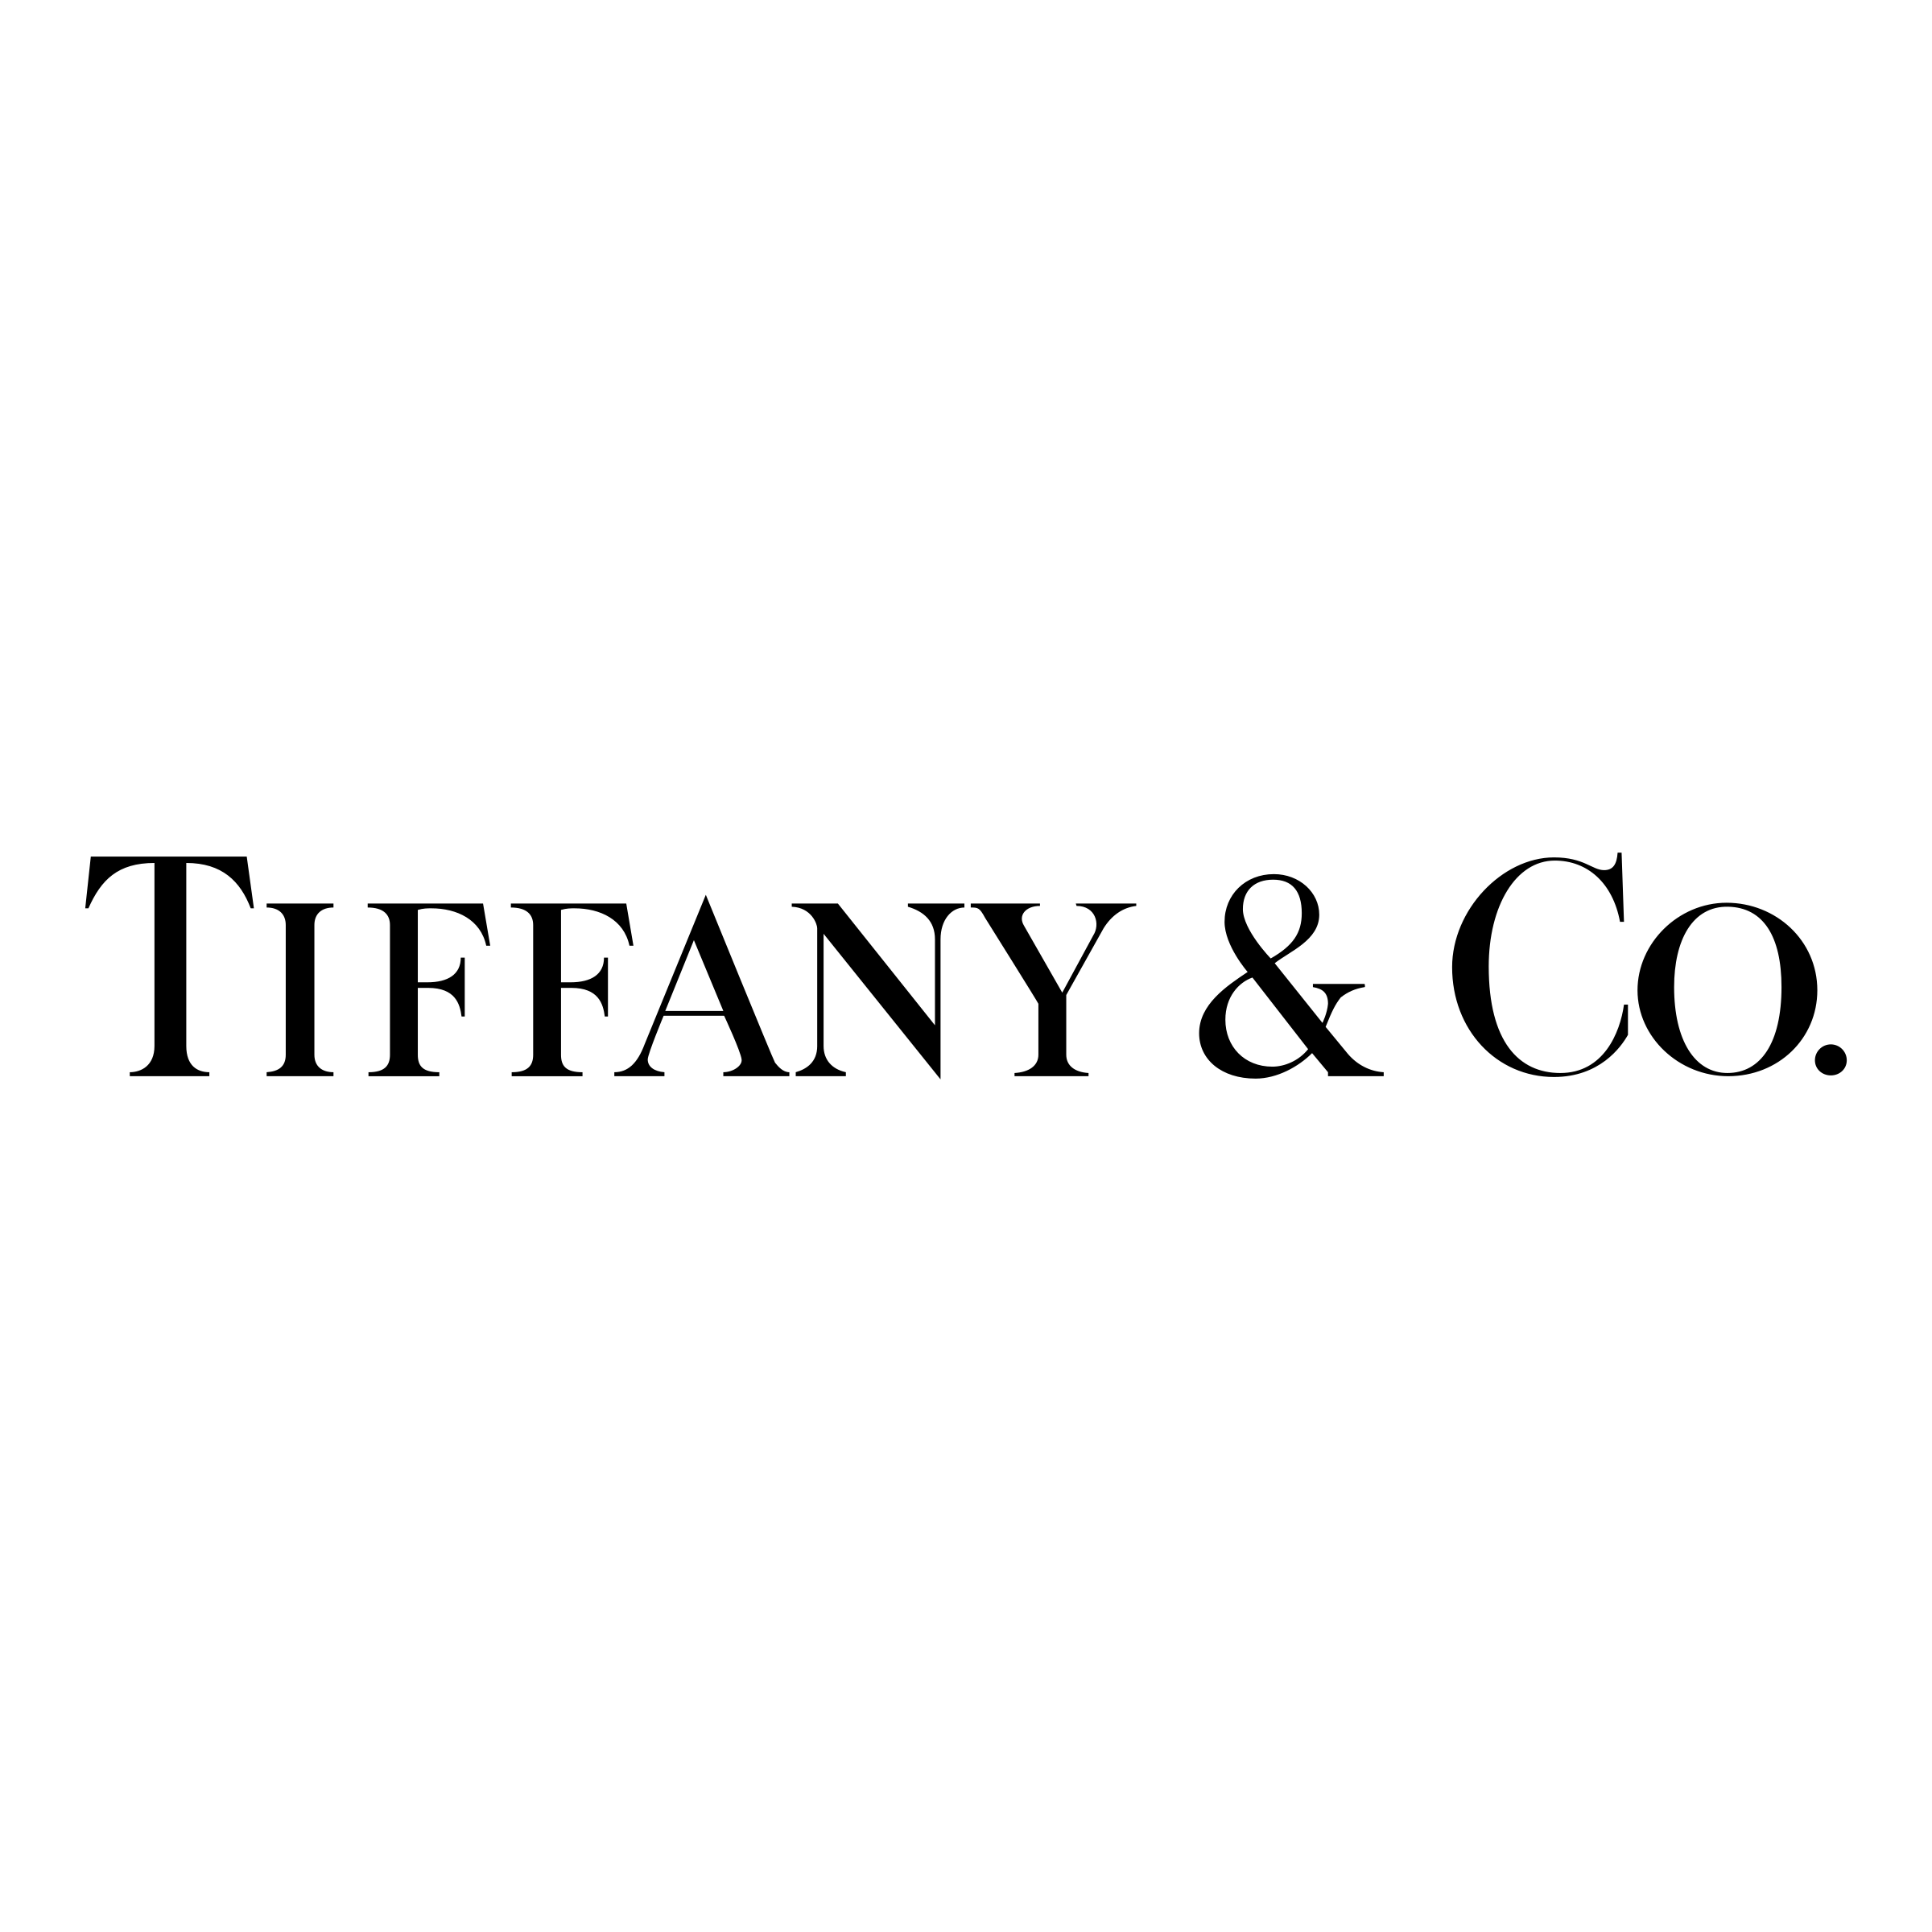 Tiffany & Co Logo - Tiffany & Co Logo PNG Transparent & SVG Vector - Freebie Supply